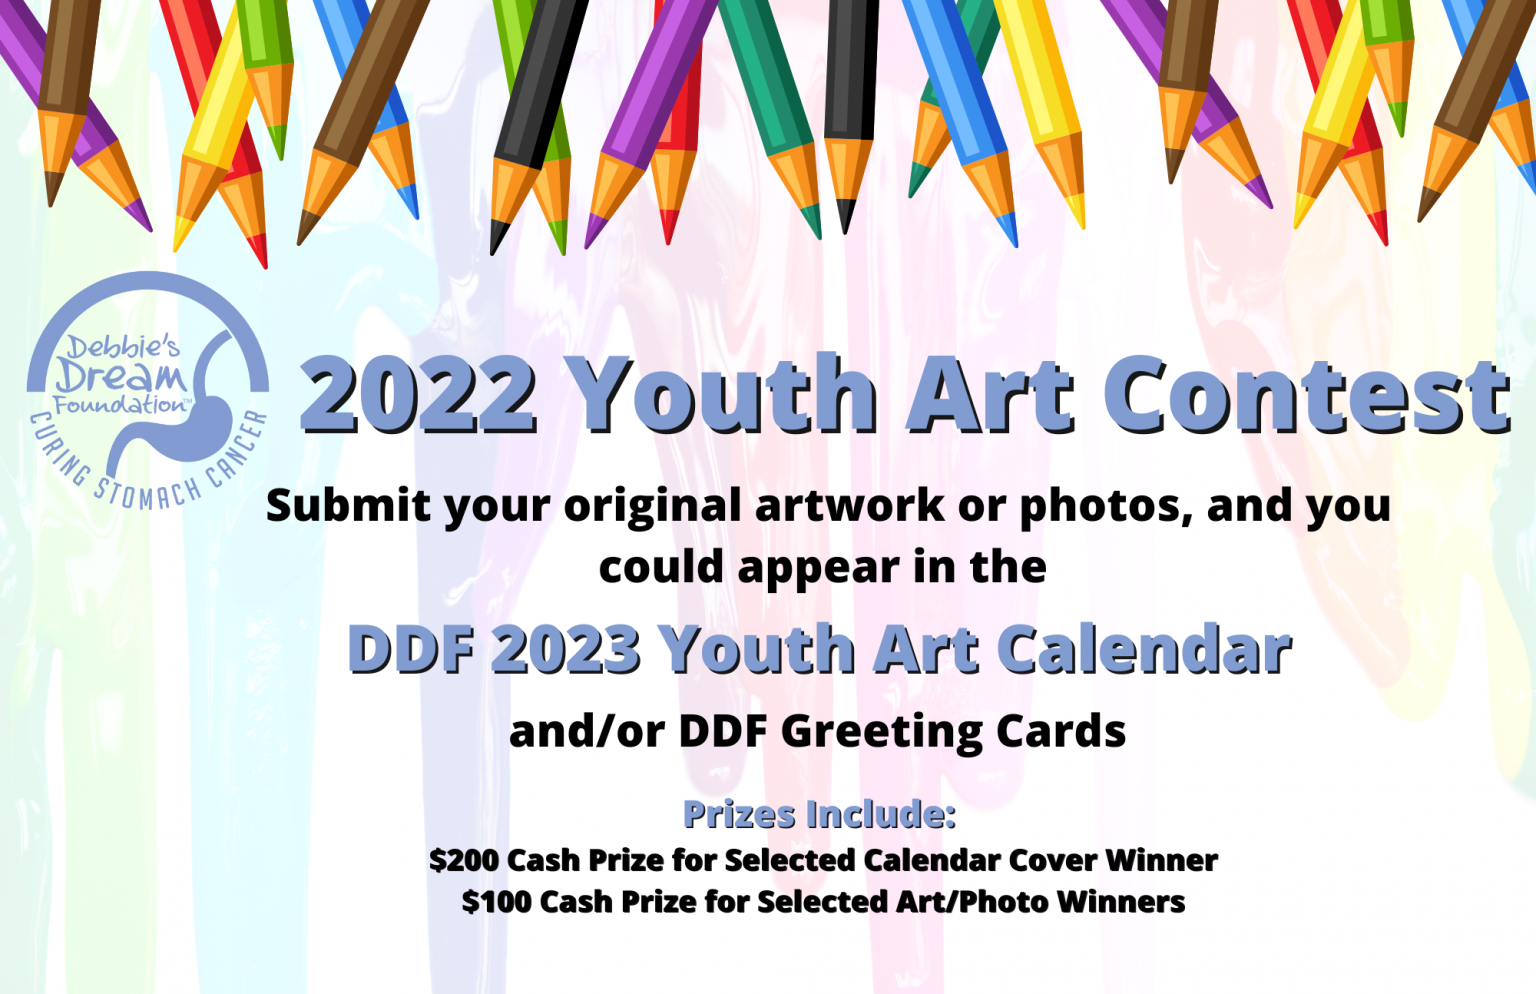 2022 Youth Art Contest Debbie's Dream Foundation